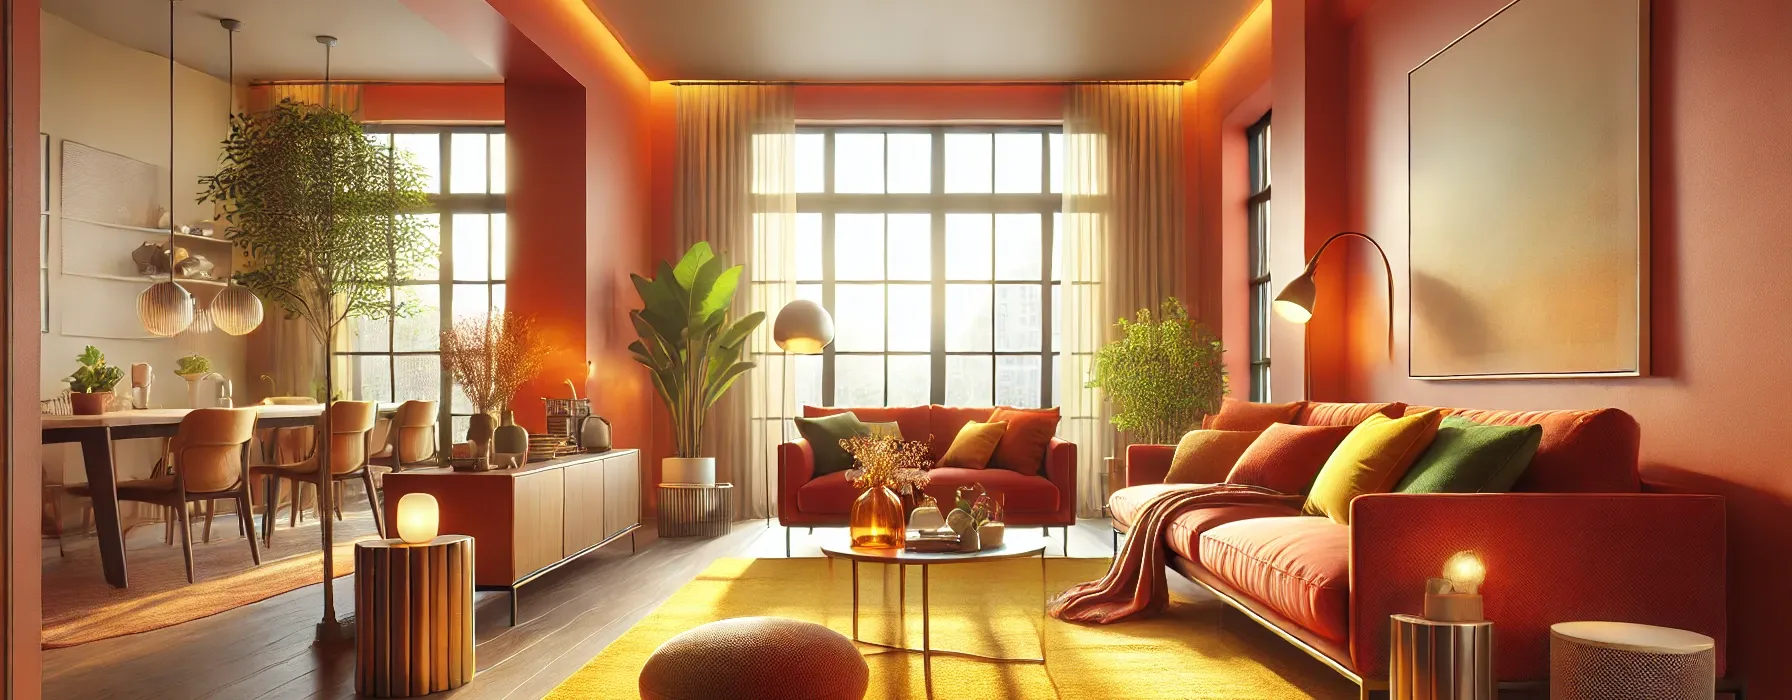 A photorealistic modern living room showcasing warm colors